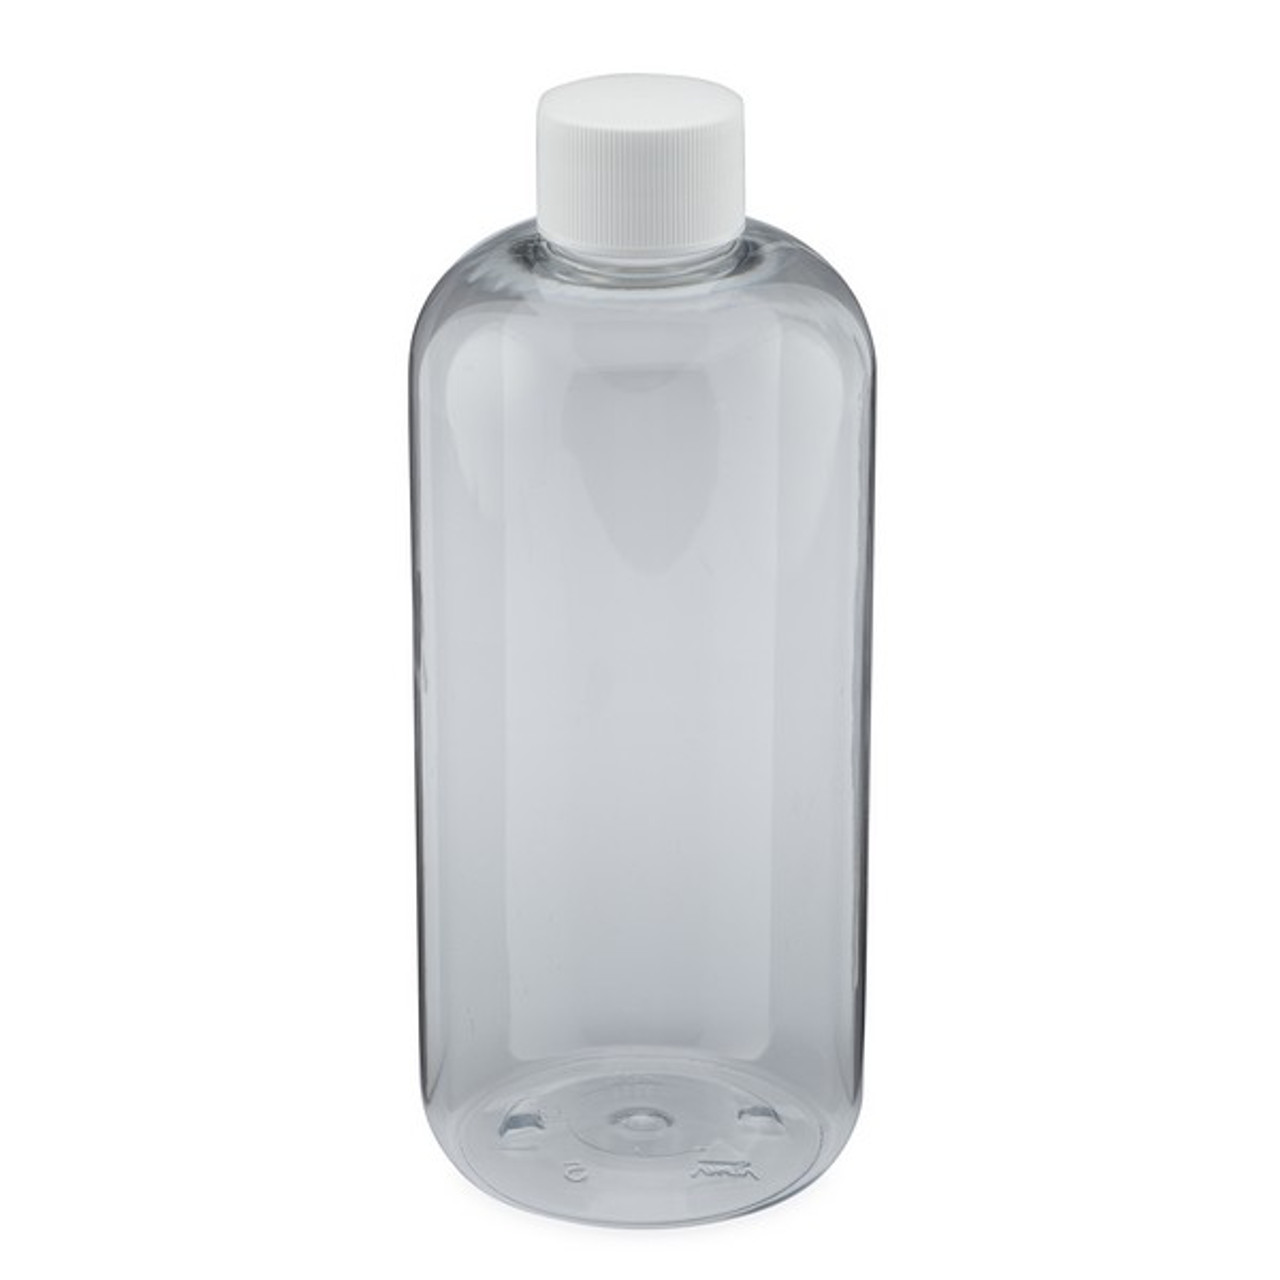 8 oz / 250 ml Clear PET (BPA Free) Plastic Oblong Flask Style